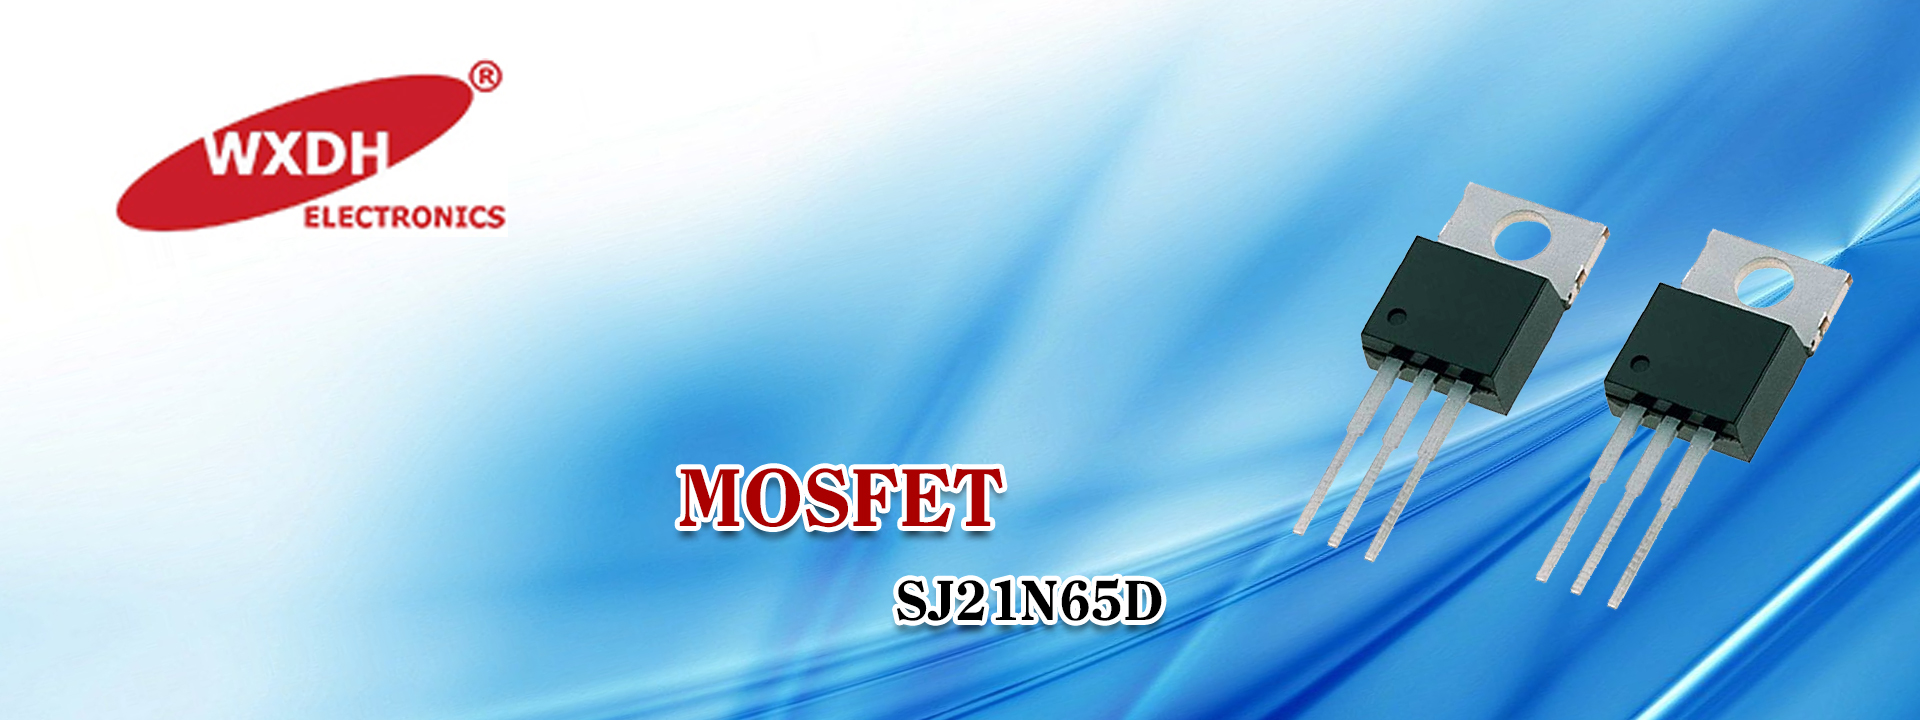 WXDH Electronics - Mosfet SJ21N65D